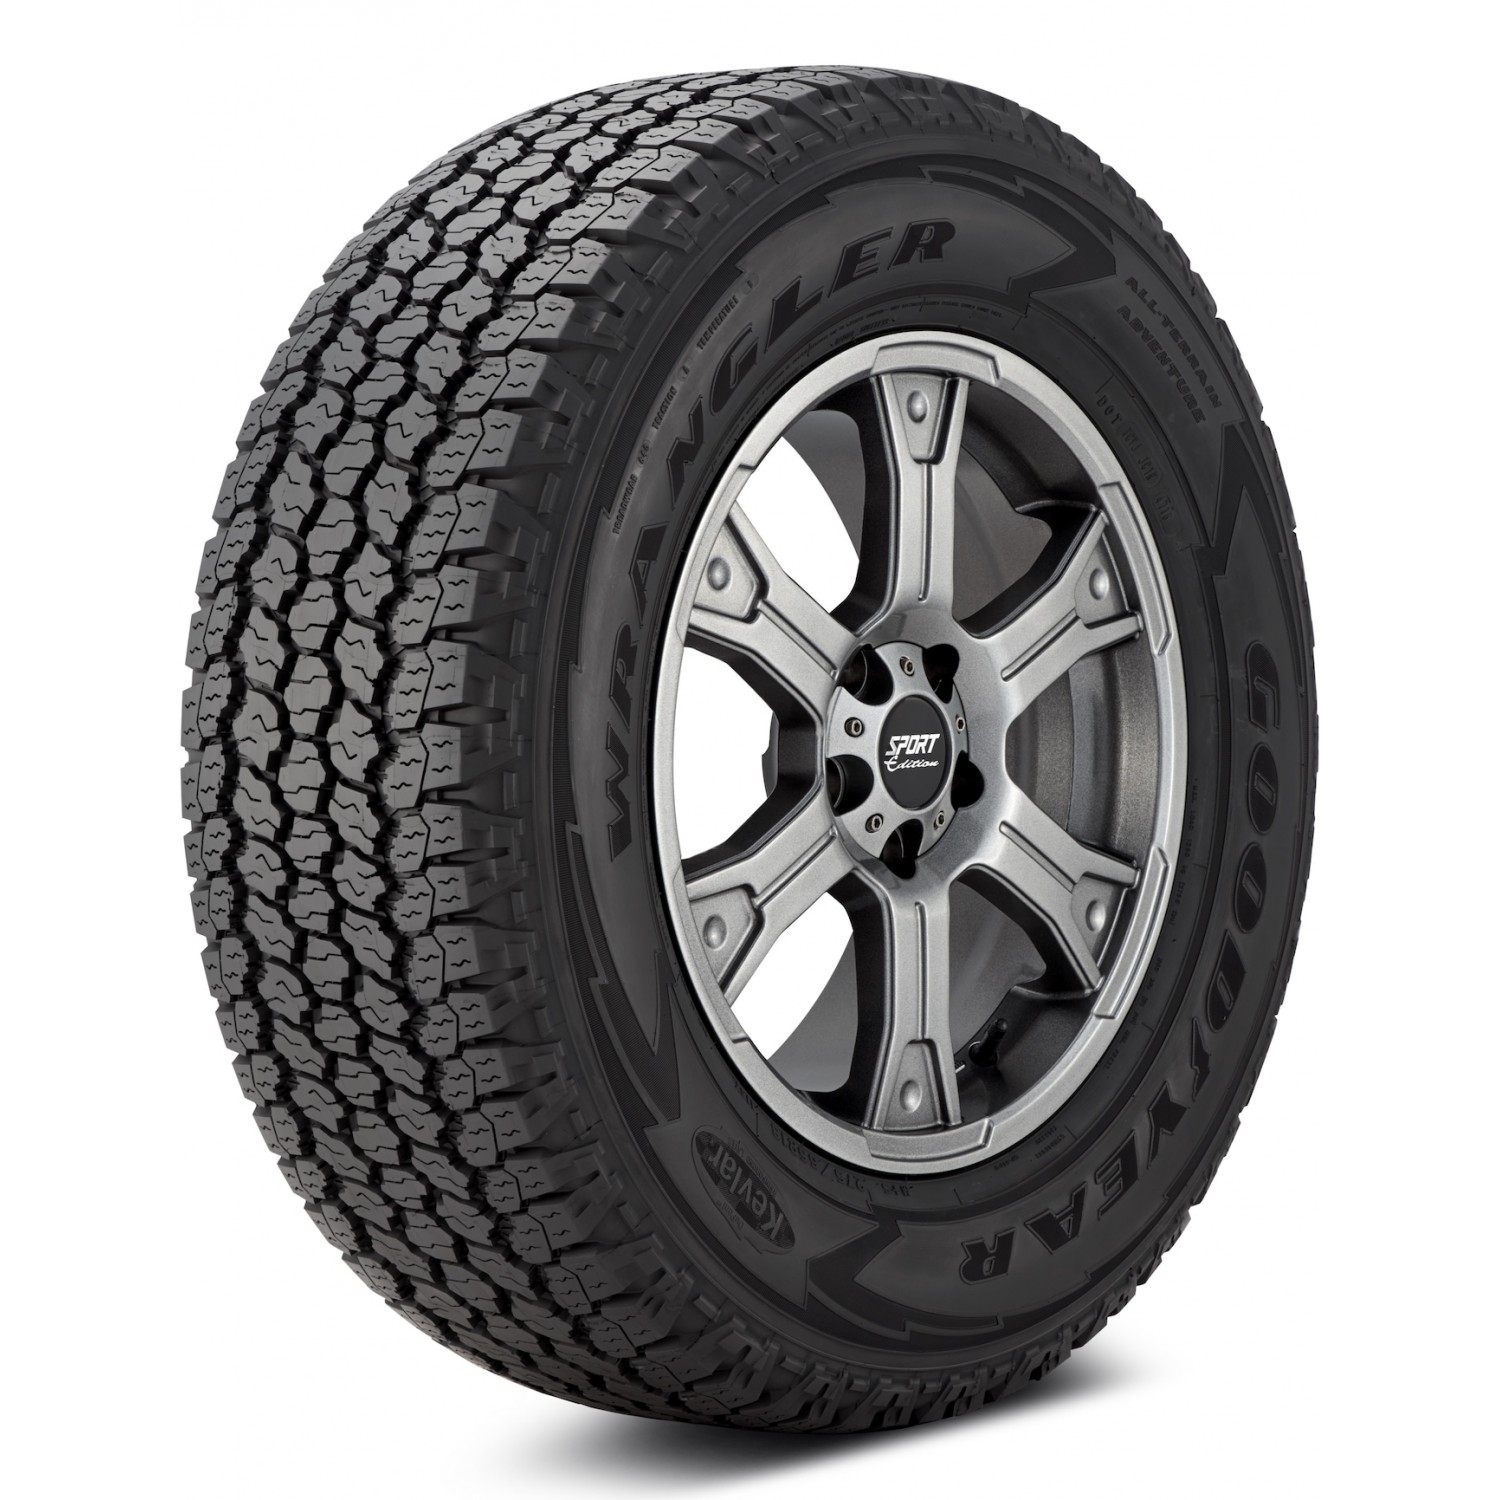 Goodyear Wrangler AT Adventure With Kevlar Black Sidewall Tire (LT245/75R17  121S) vzn121186